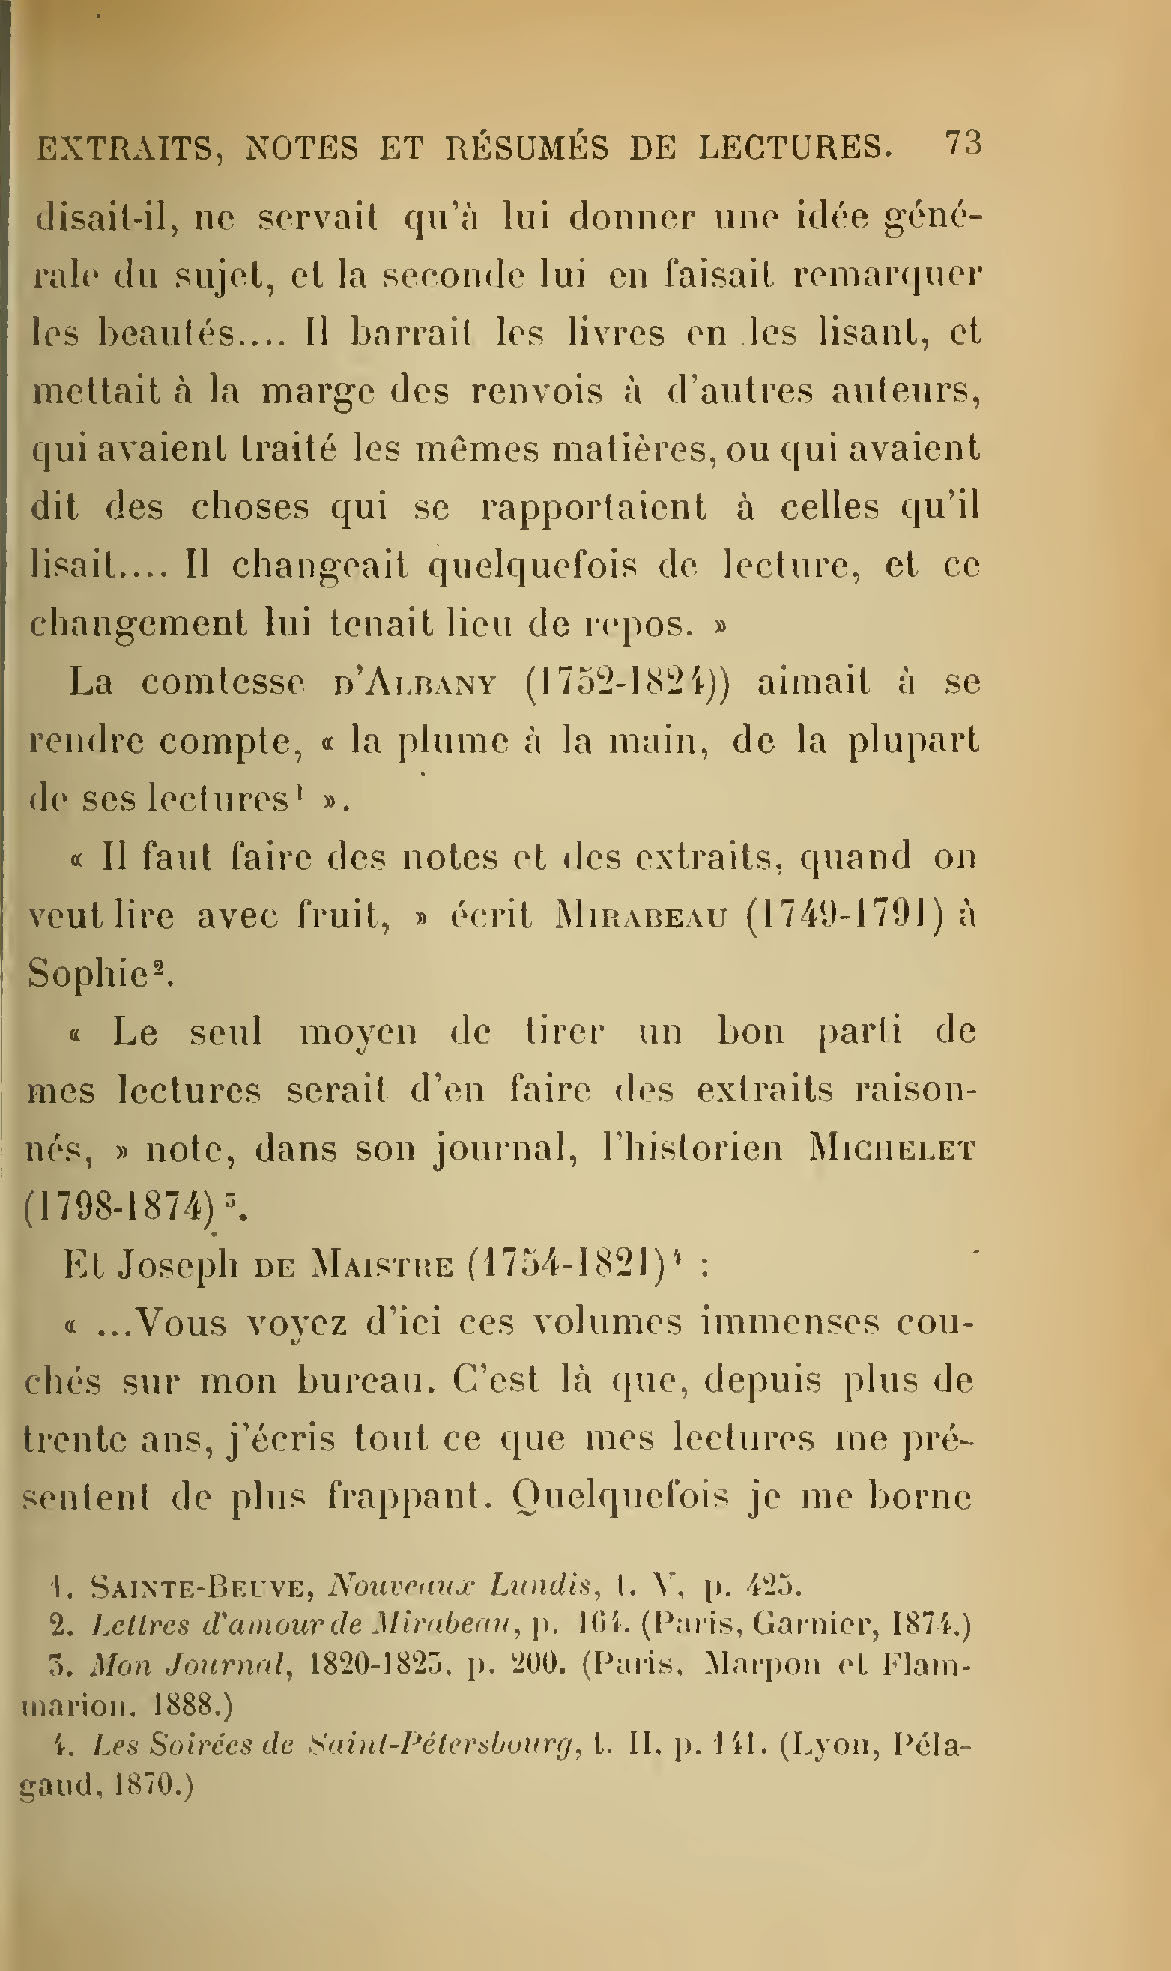 Albert Cim, Le Livre, t. II, p. 073.